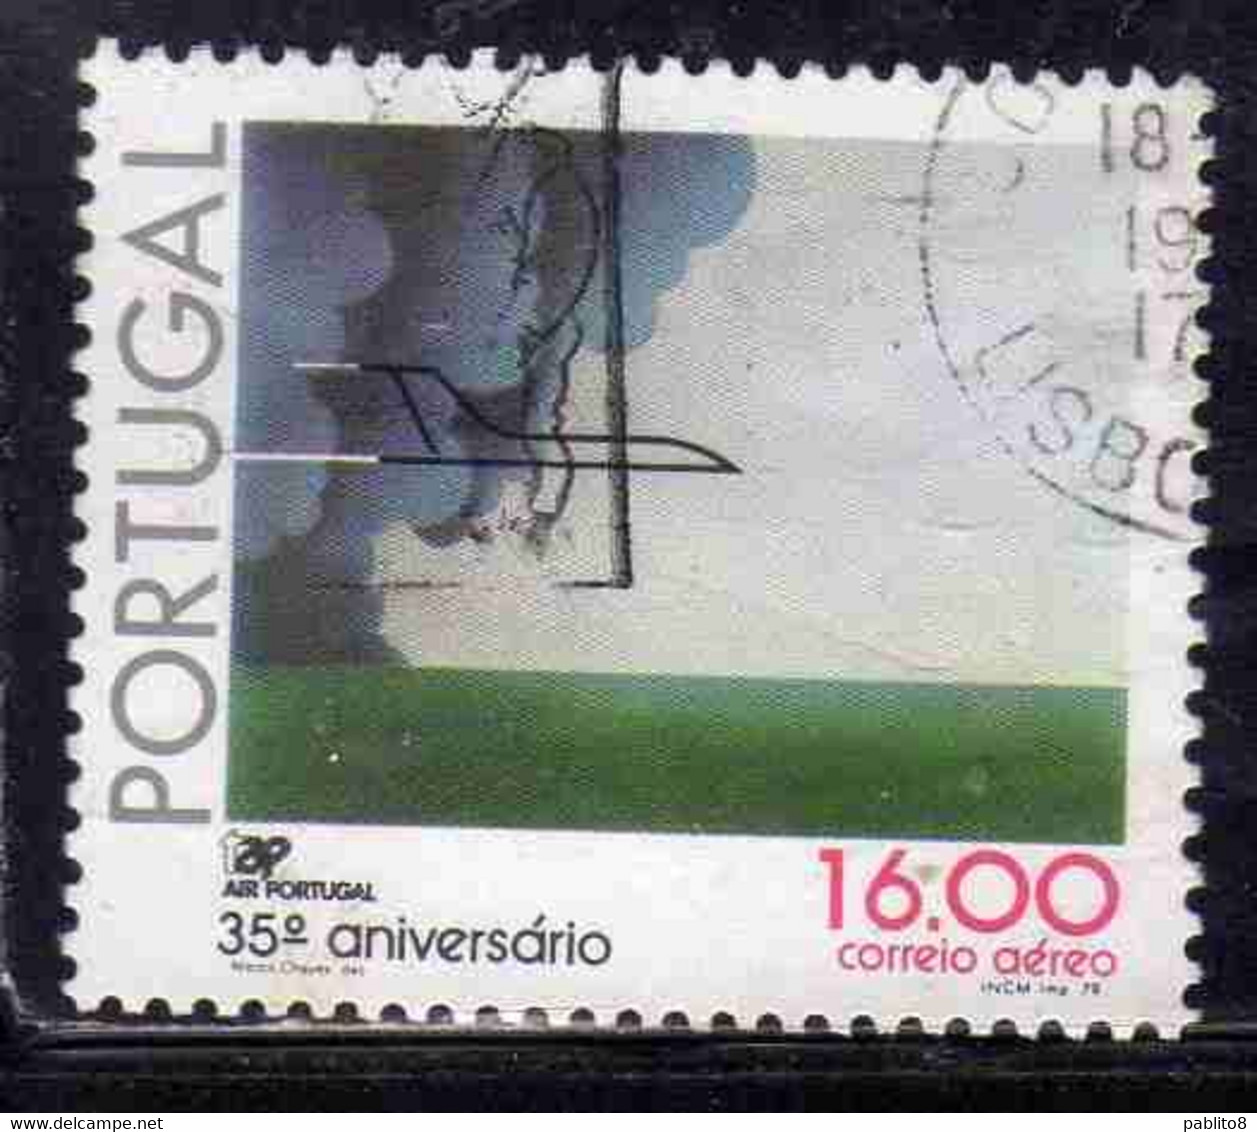 PORTUGAL PORTOGALLO 1979 AIR POST MAIL AIRMAIL POSTA AEREA TAP AIRLINE 35th ANNIVERSARY 16e USED USATO OBLITERE' - Used Stamps